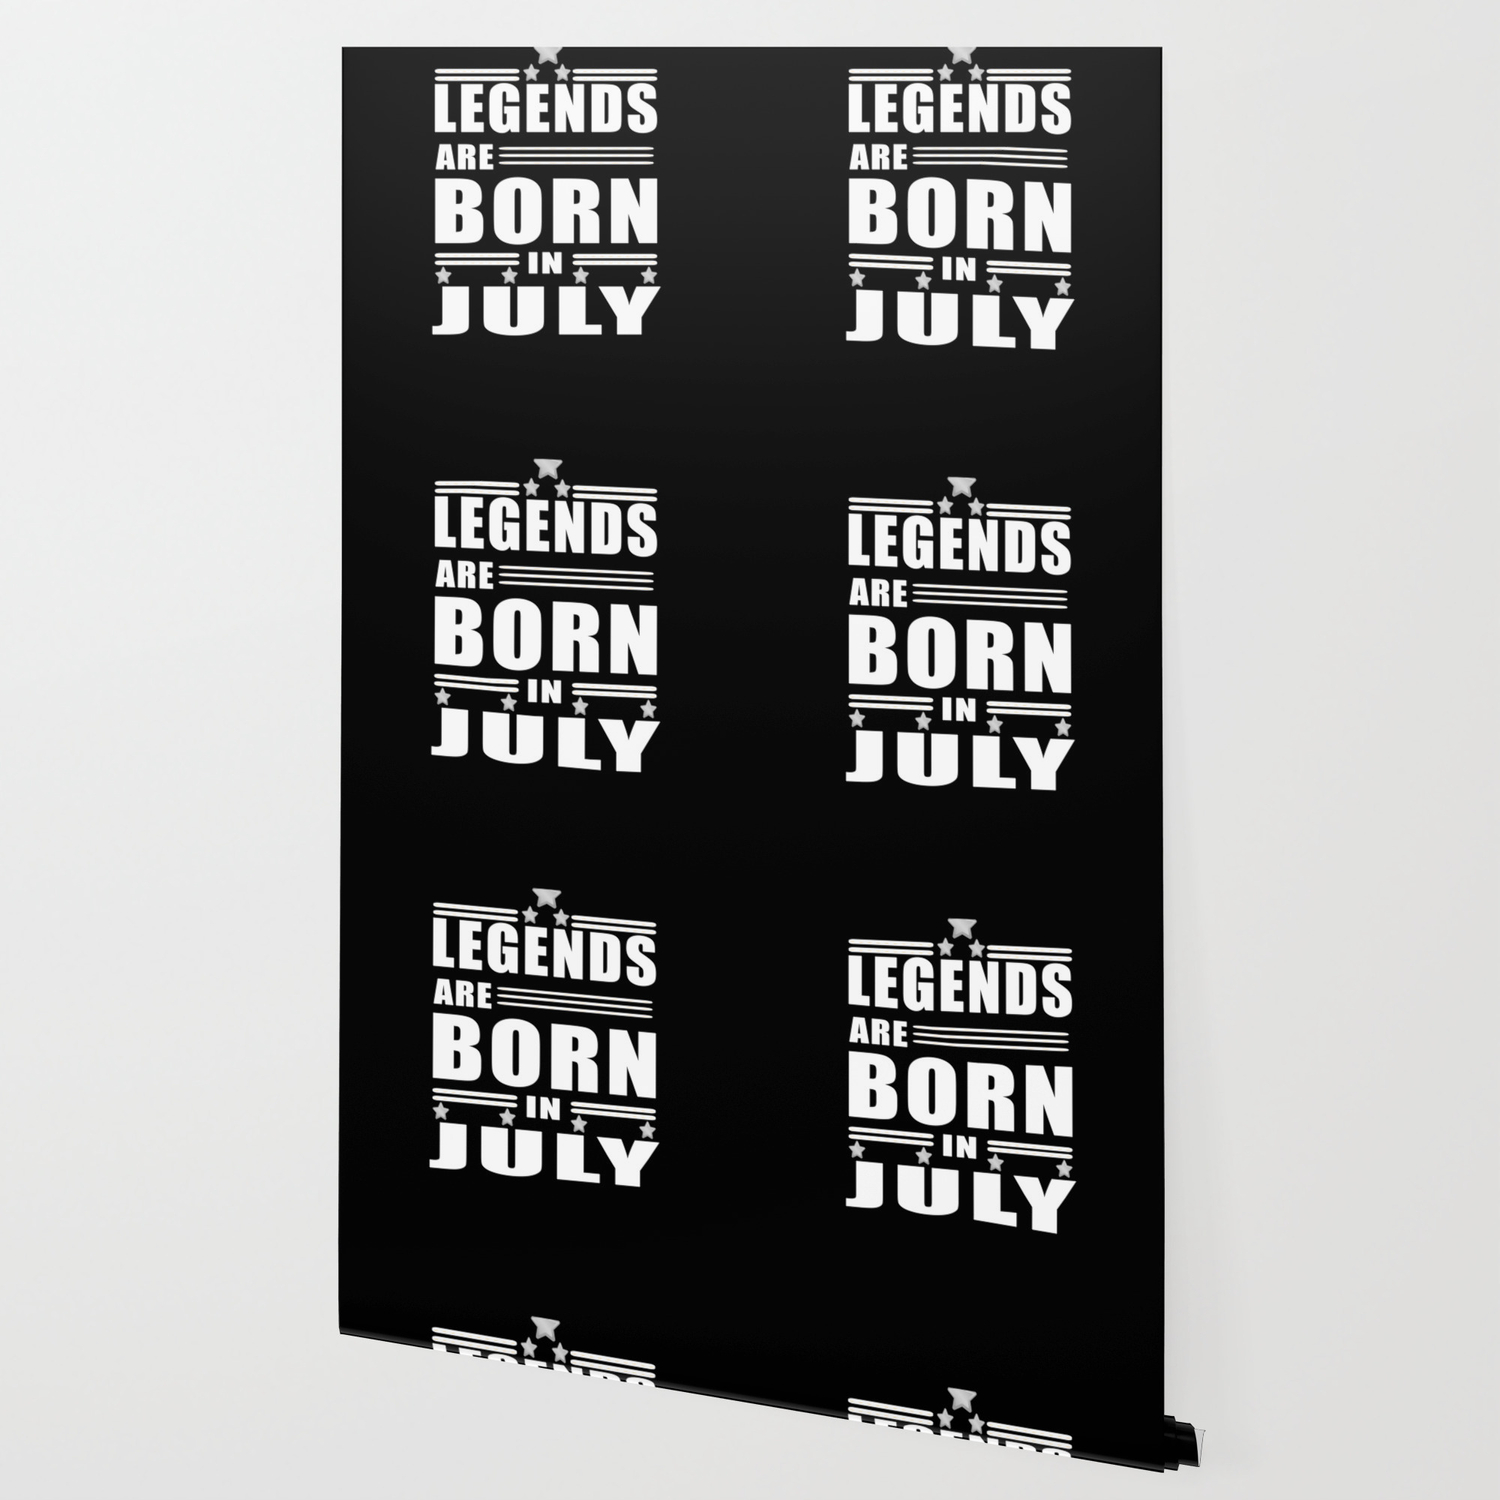 Legend Are Born In July Design Wallpaper by SBR DES | Society6